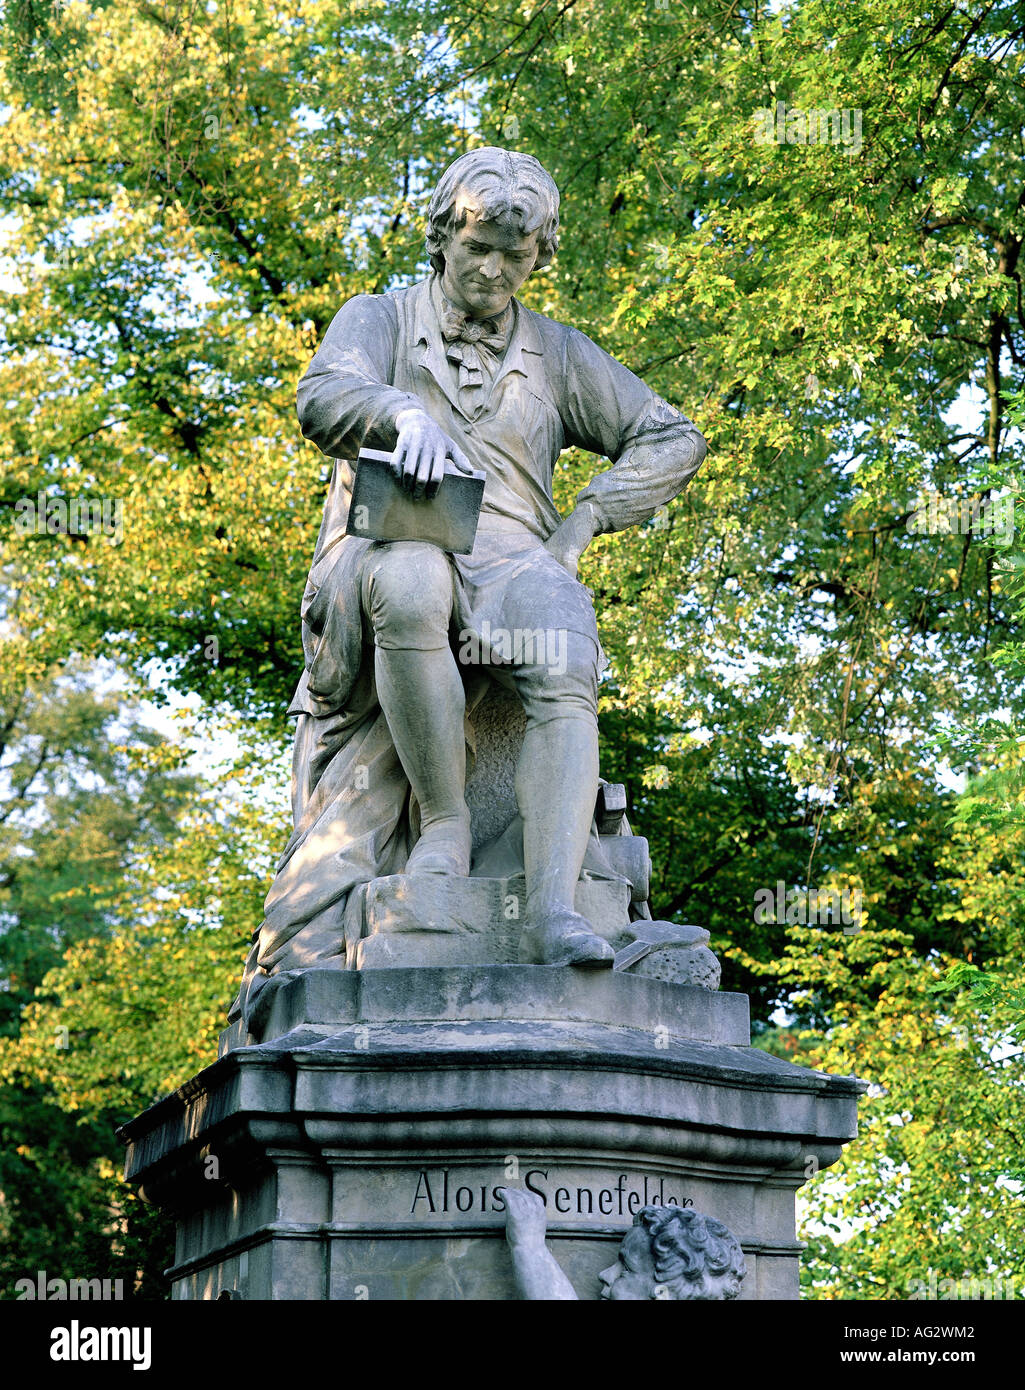 Senefelder, Alois, 6.11.1771 - 26.2.1834, Austrian printer and inventor, inventor of lithography, monument, Prenzlauer Berg, Berlin, Germany, Stock Photo